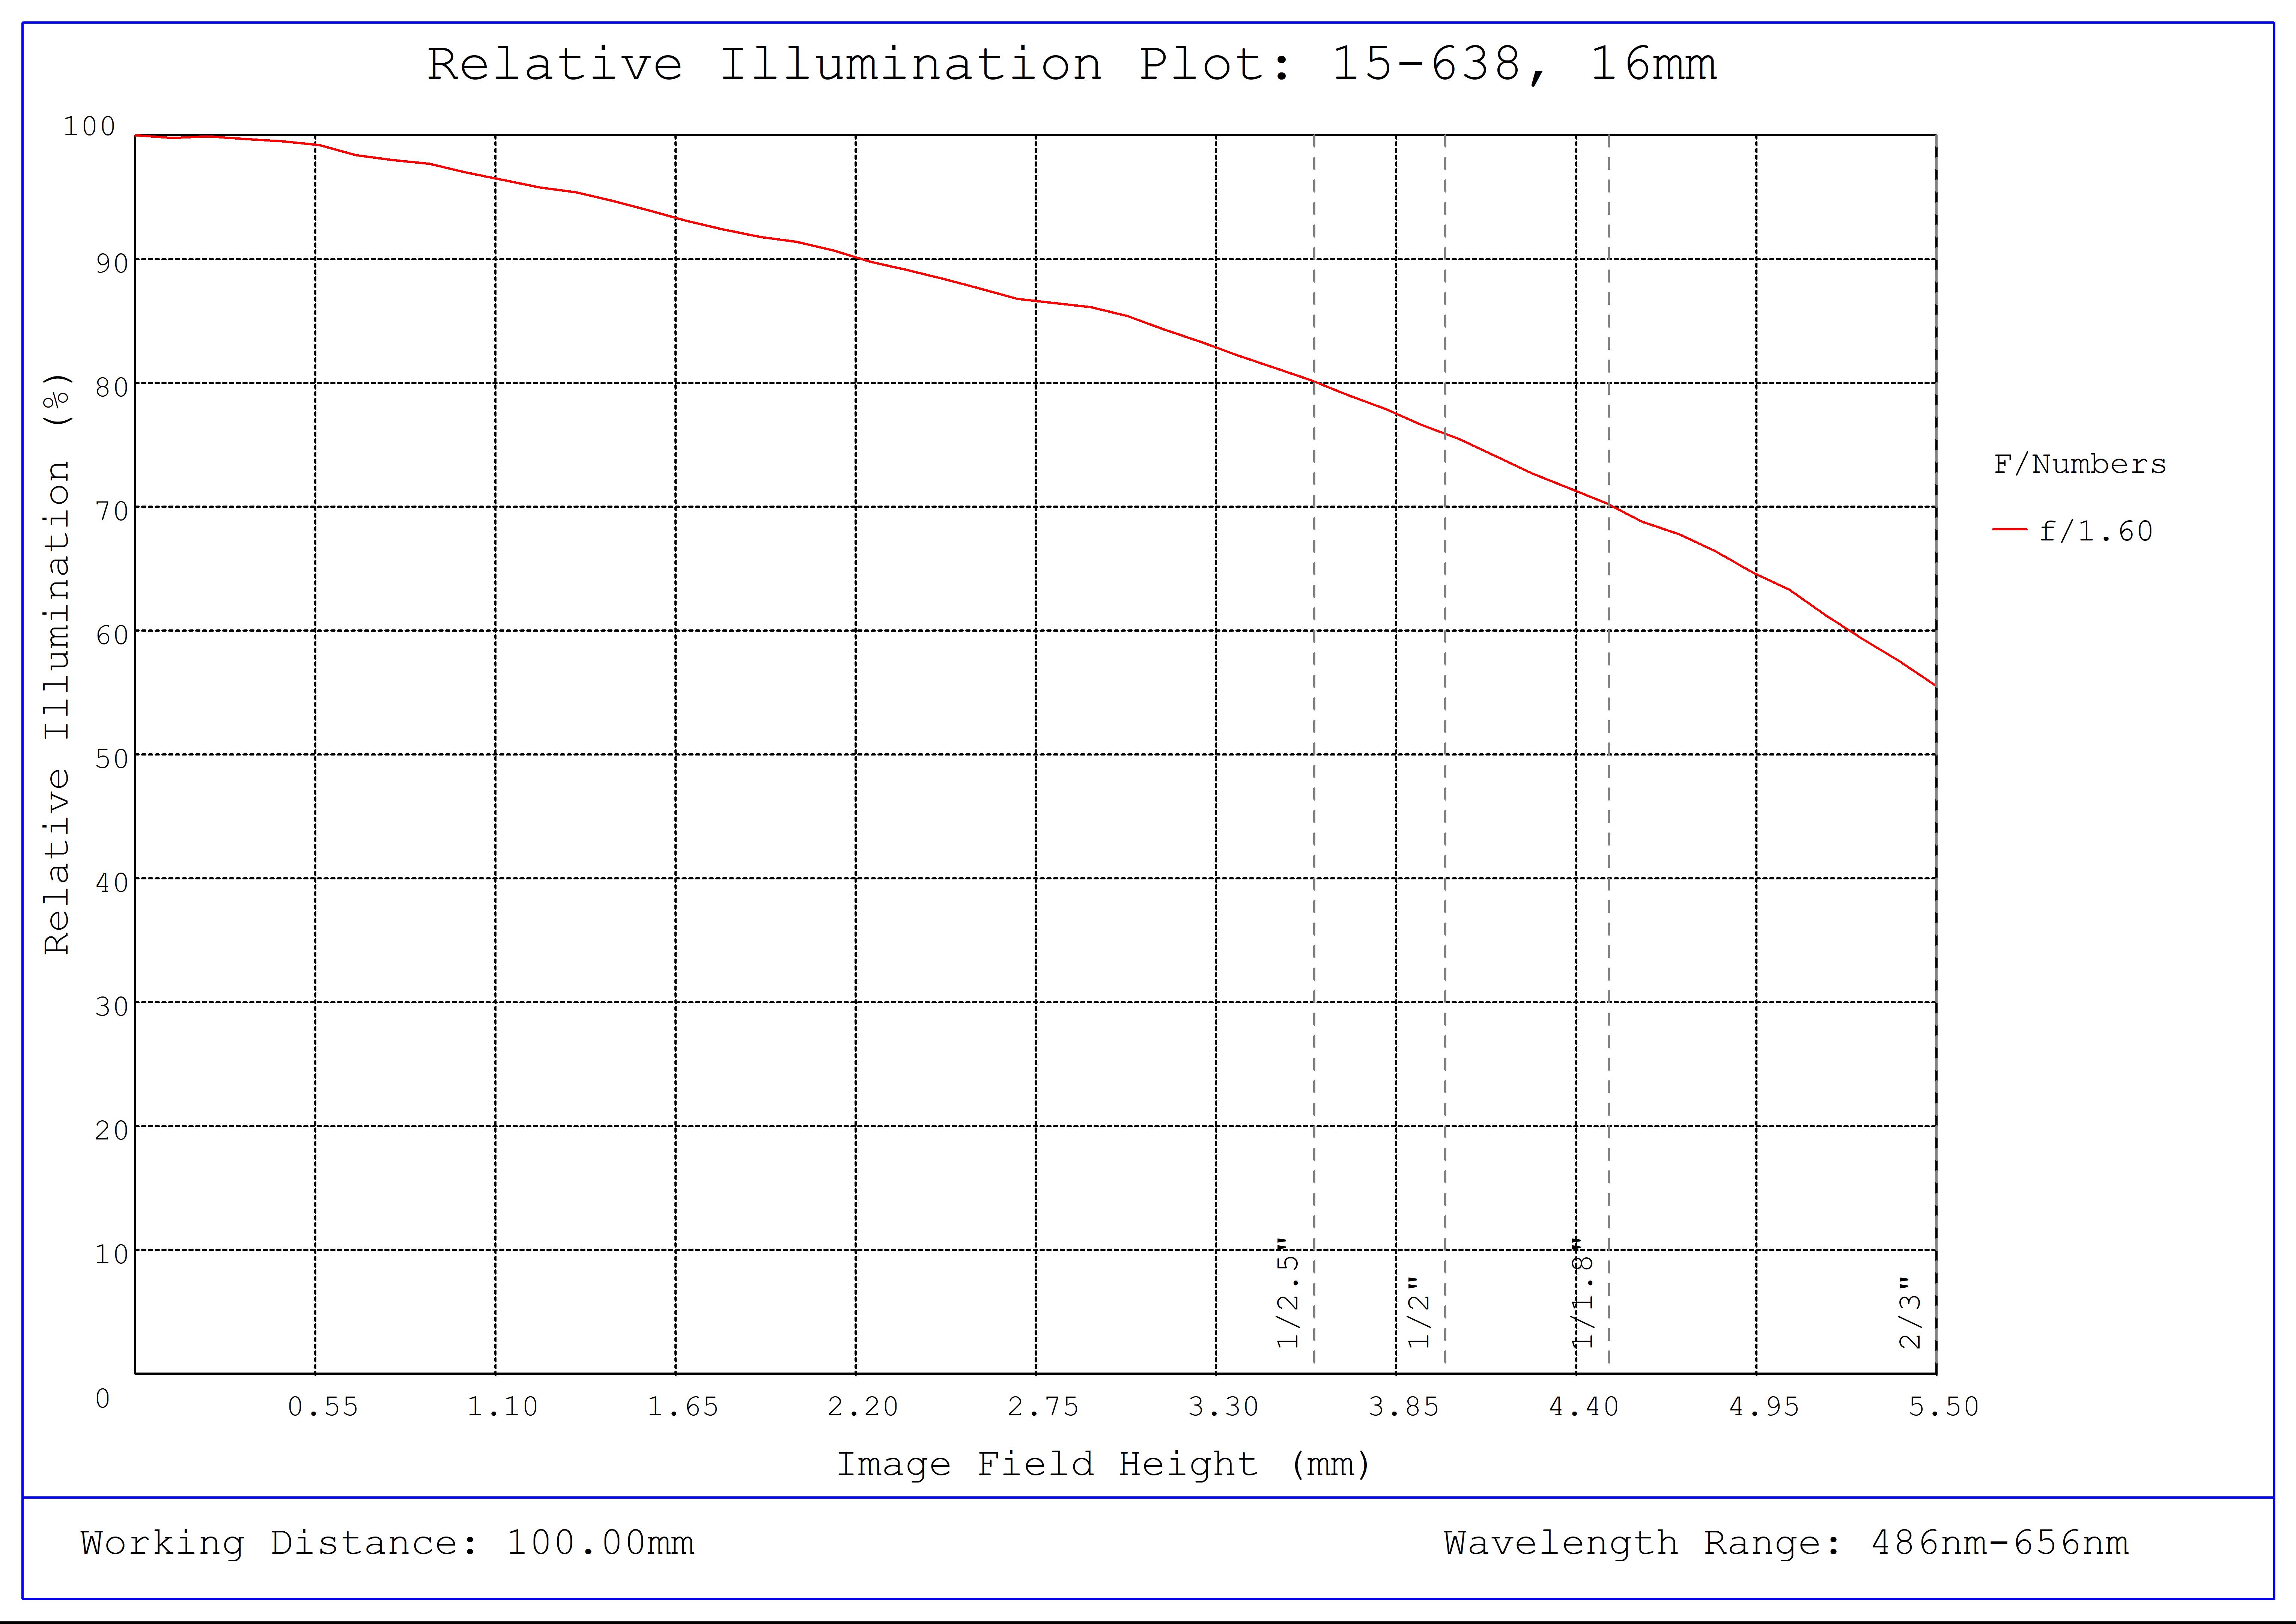 #15-638, 16mm, f/1.6 Cw Series Fixed Focal Length Lens, Relative Illumination Plot